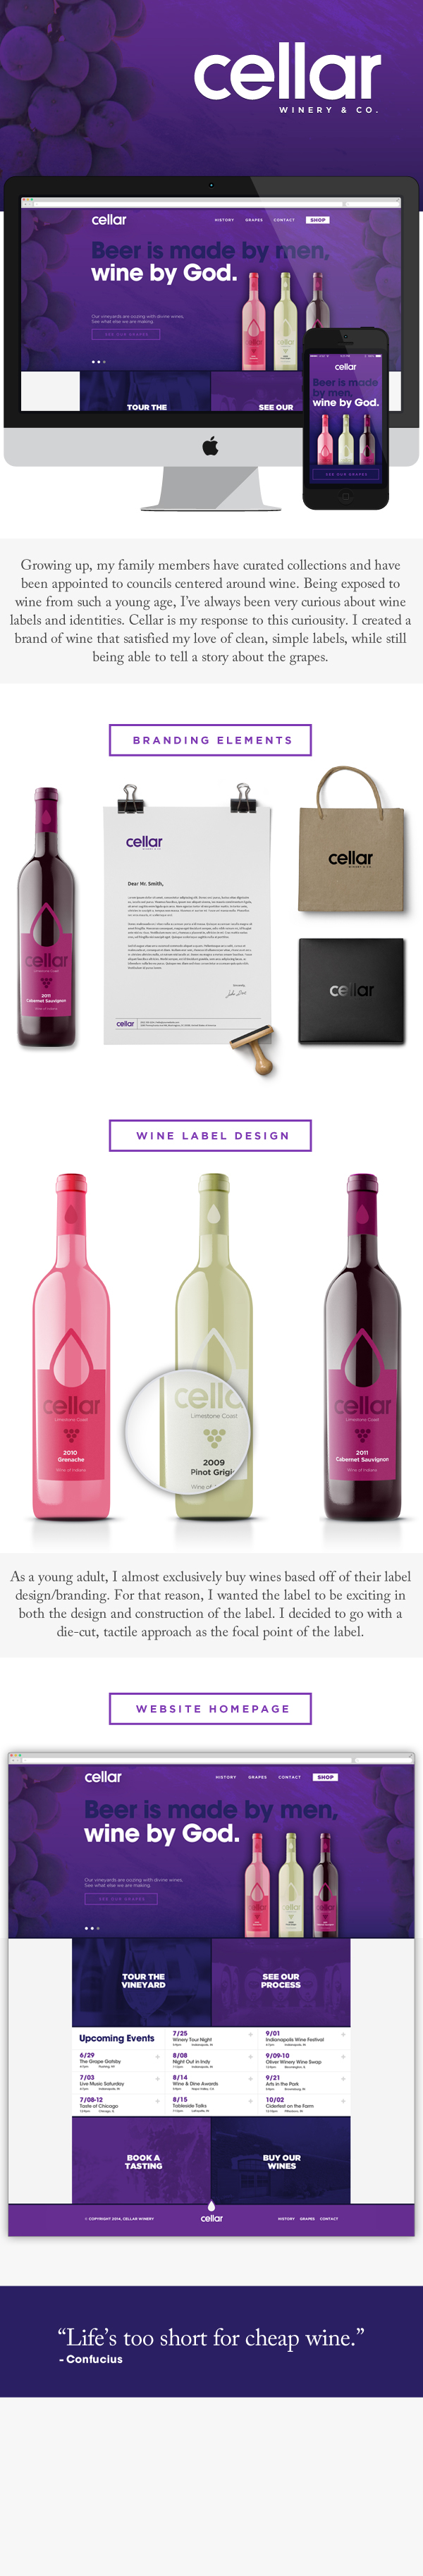 wine Cellar grapes identity brand Web Website Spirits alcohol vino purple Fruit juice